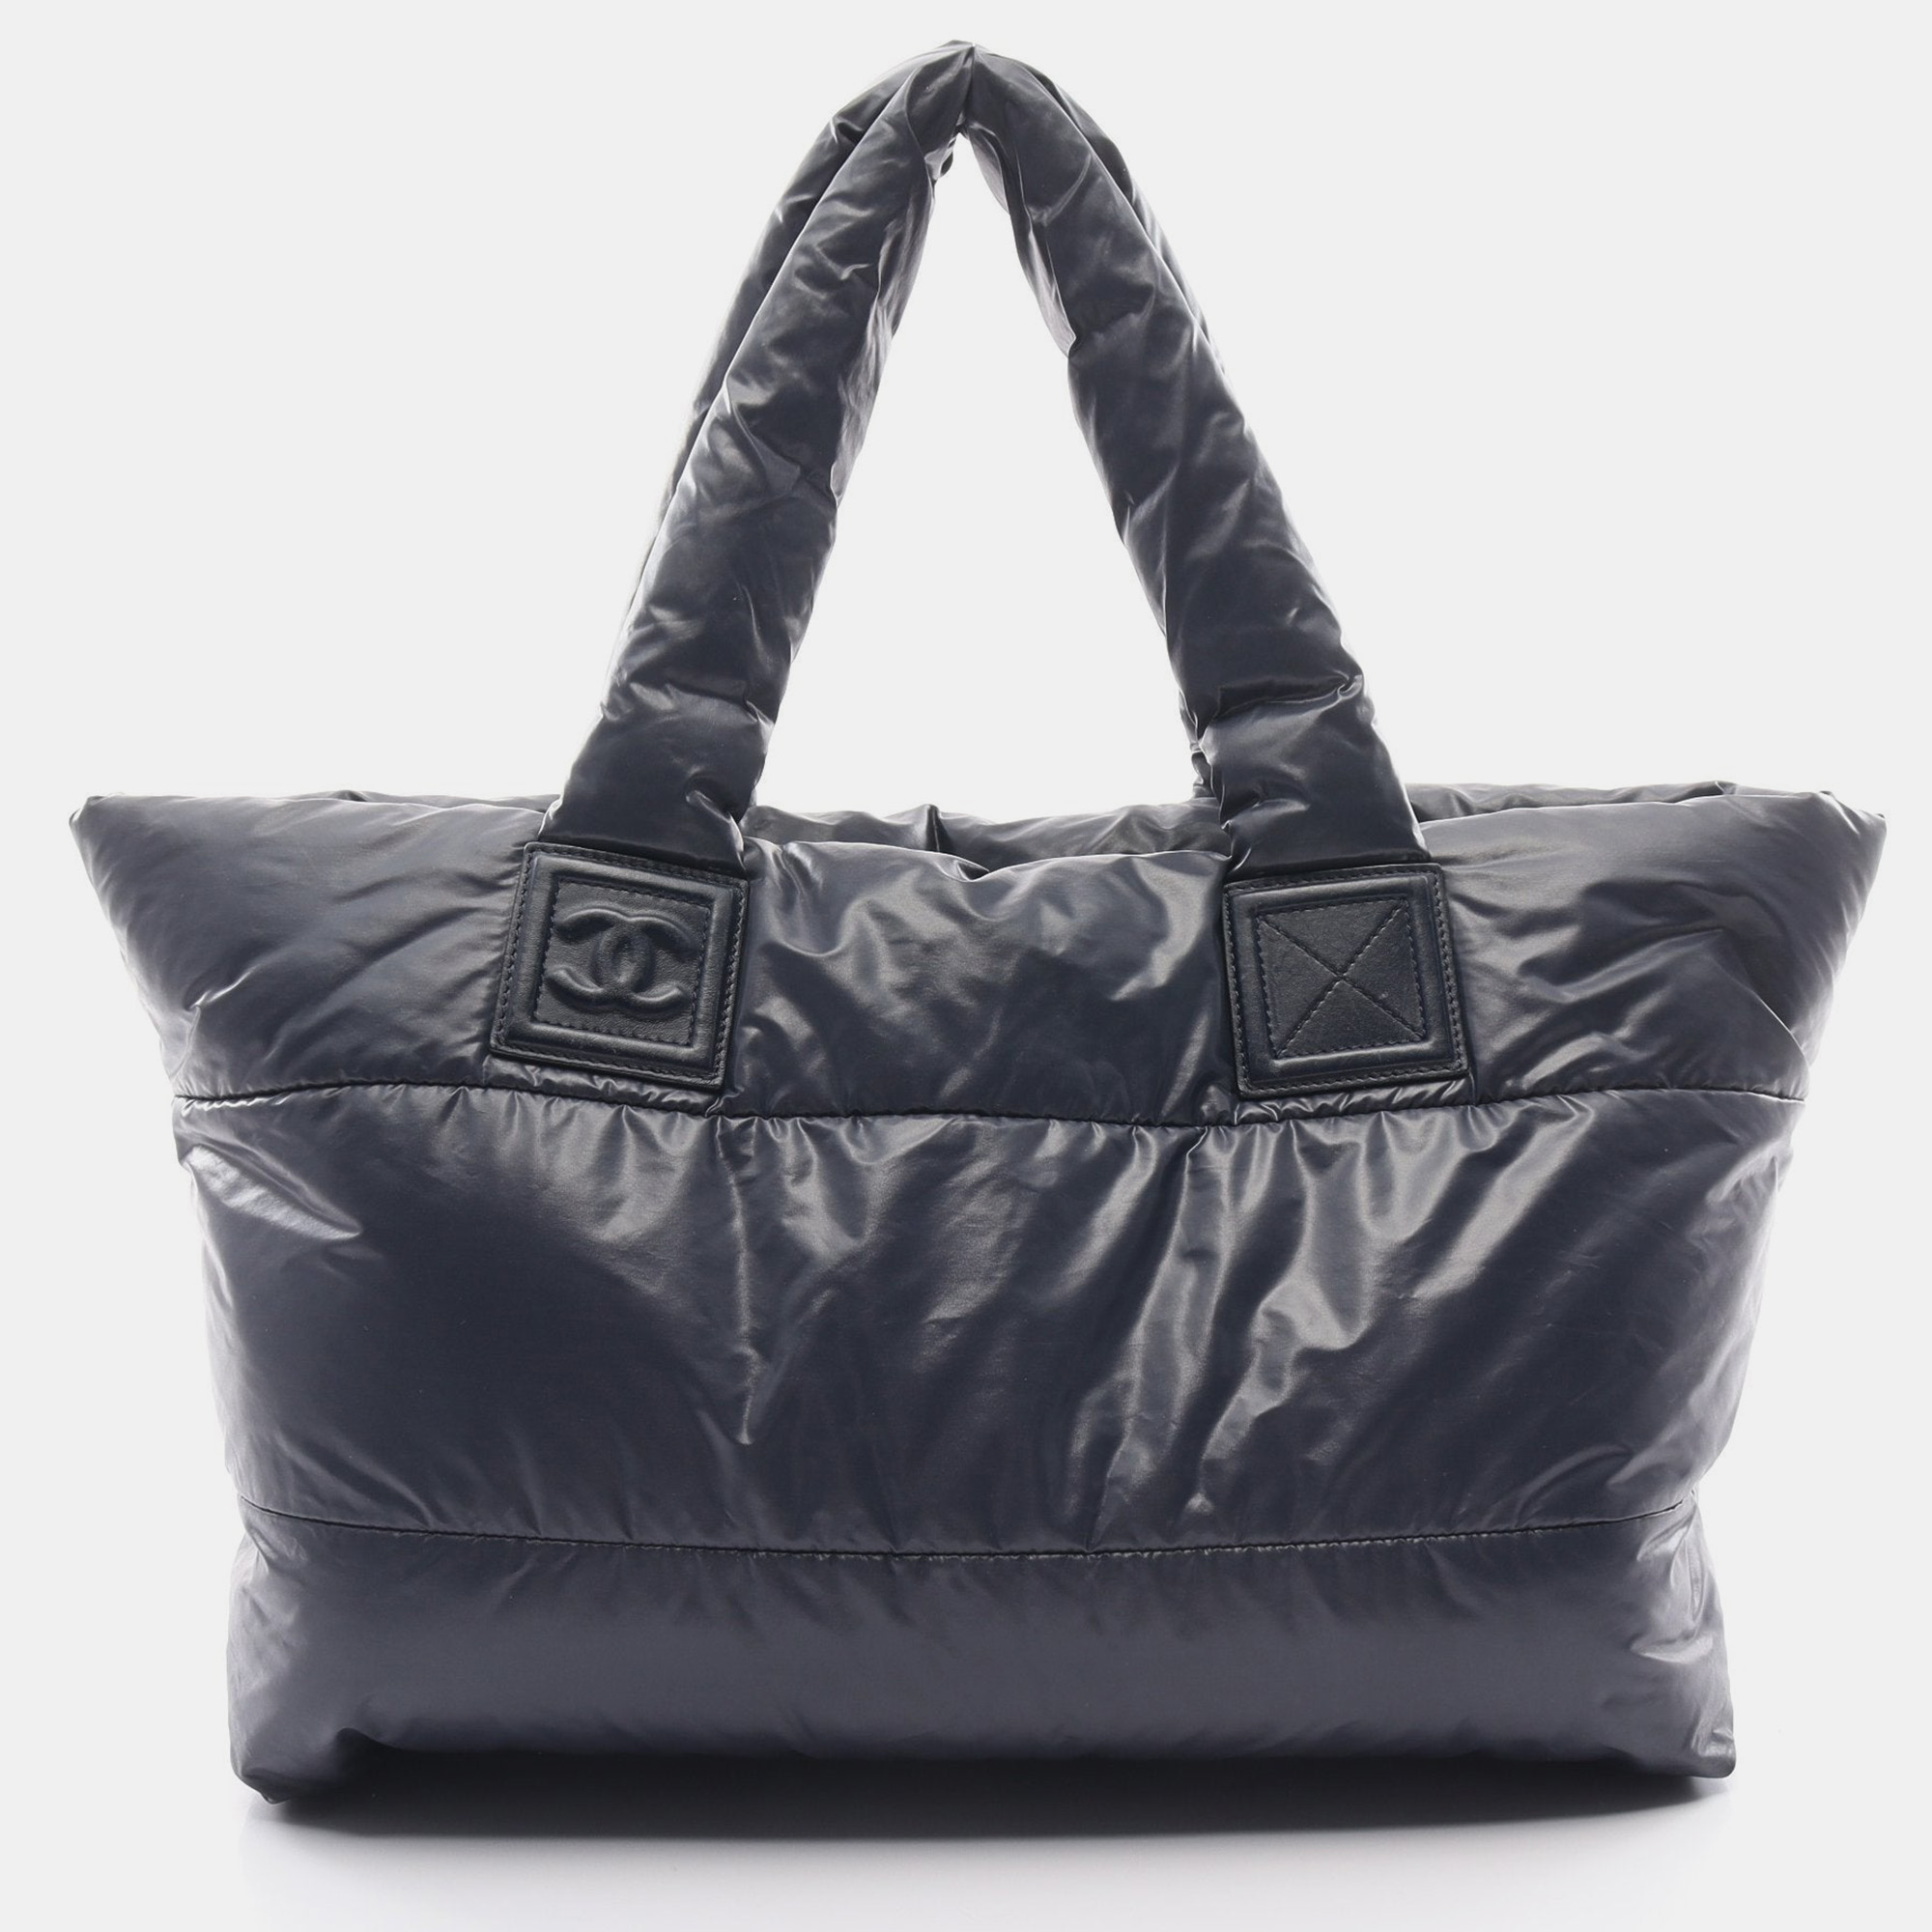 Chanel coco coon mm handbag tote bag nylon leather dark navy bordeaux reversible